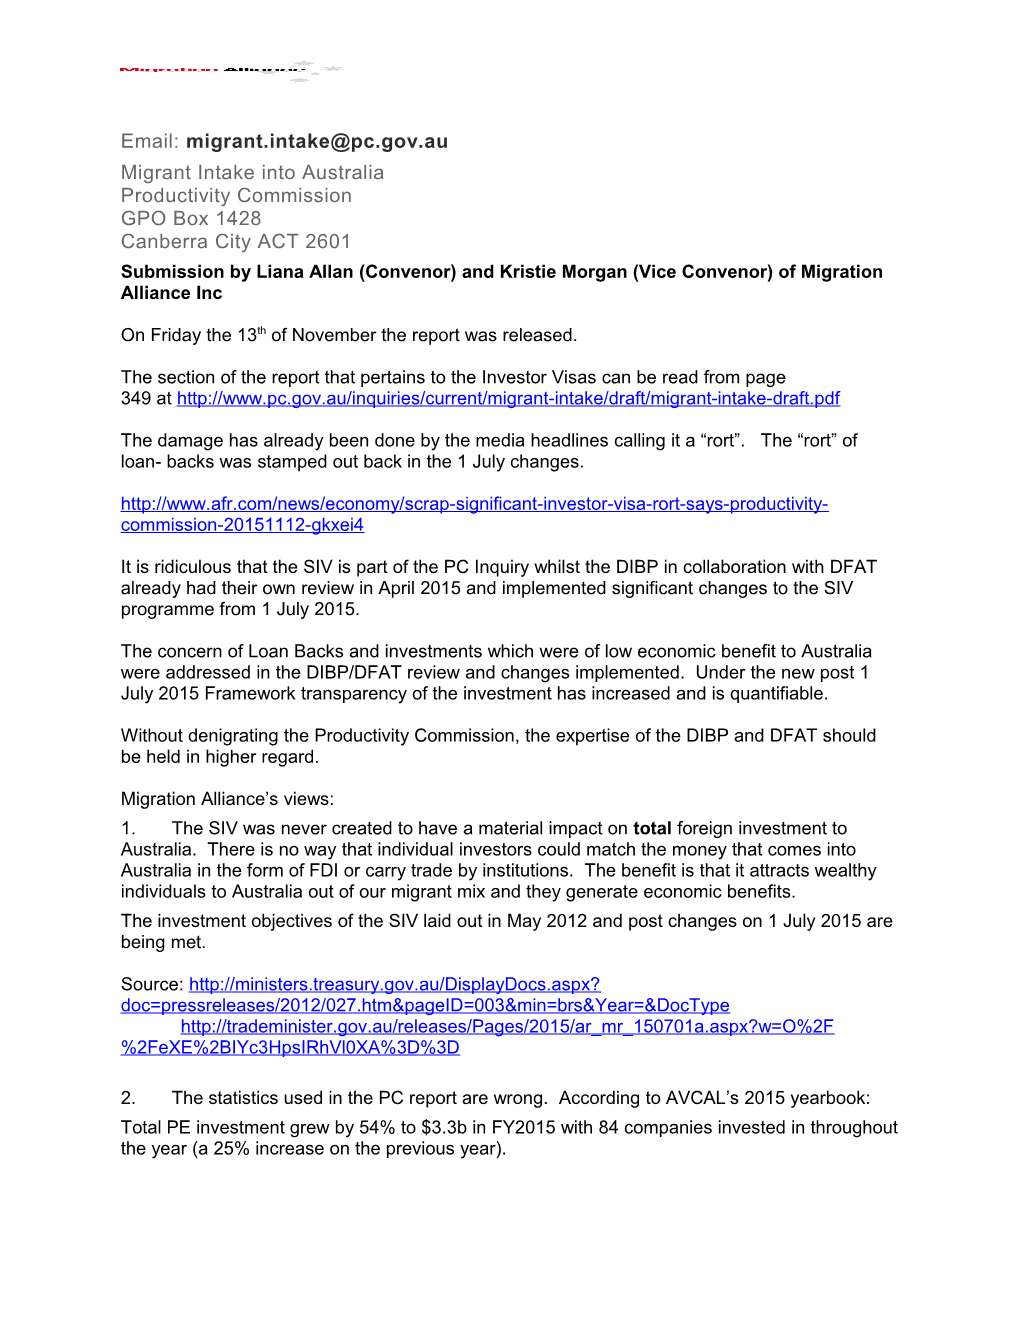 Submission DR89 - Migration Alliance Inc - Migrant Intake Into Australia - Public Inquiry